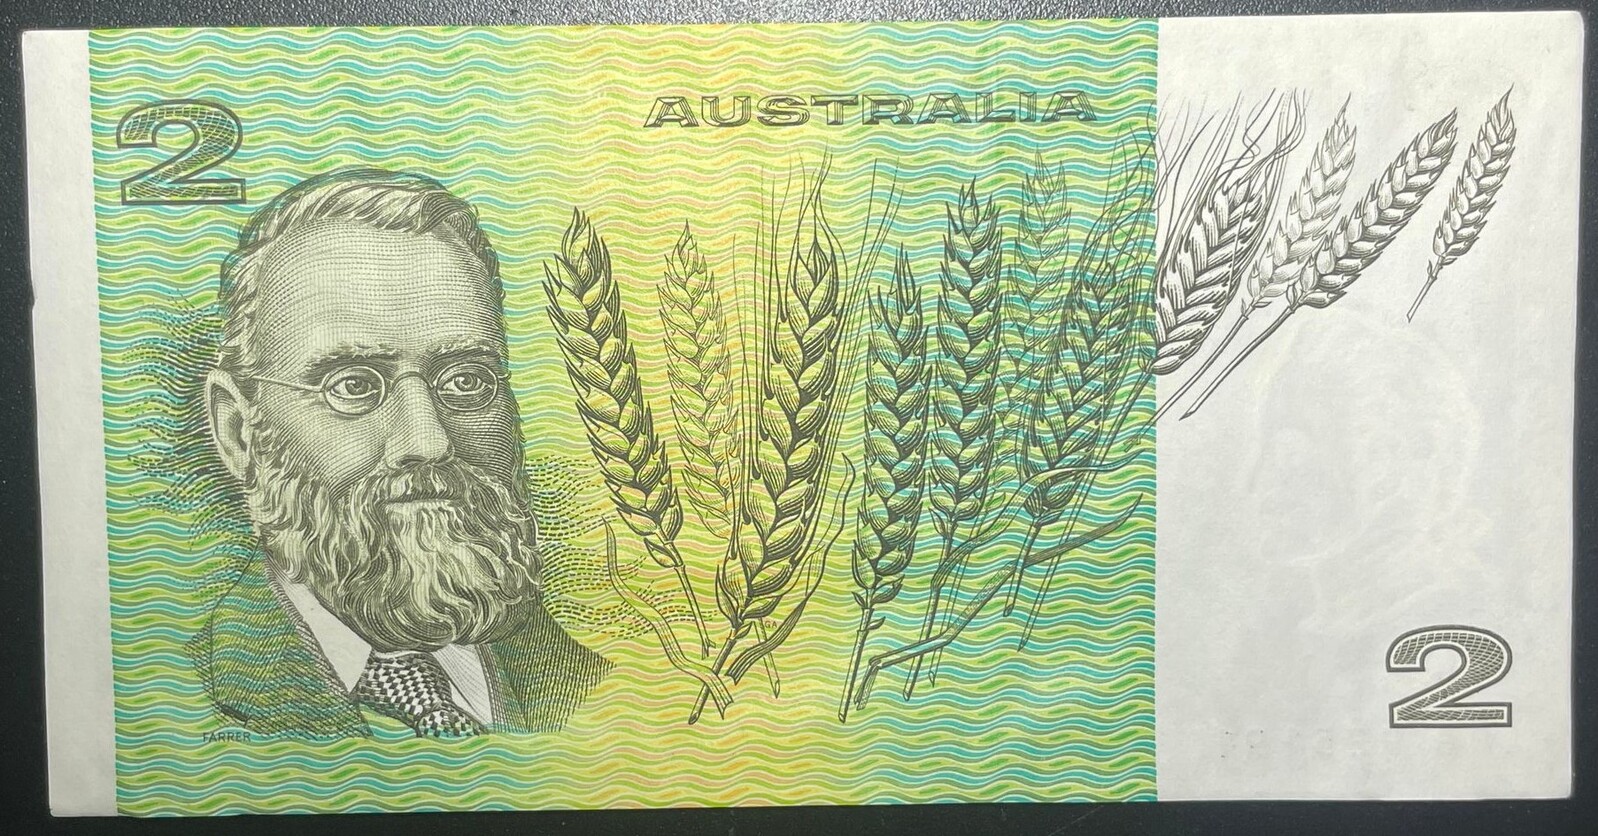 Last Prefix Australian $2 Paper Banknote Johnston/Fraser Signature EF Condition LQG925173